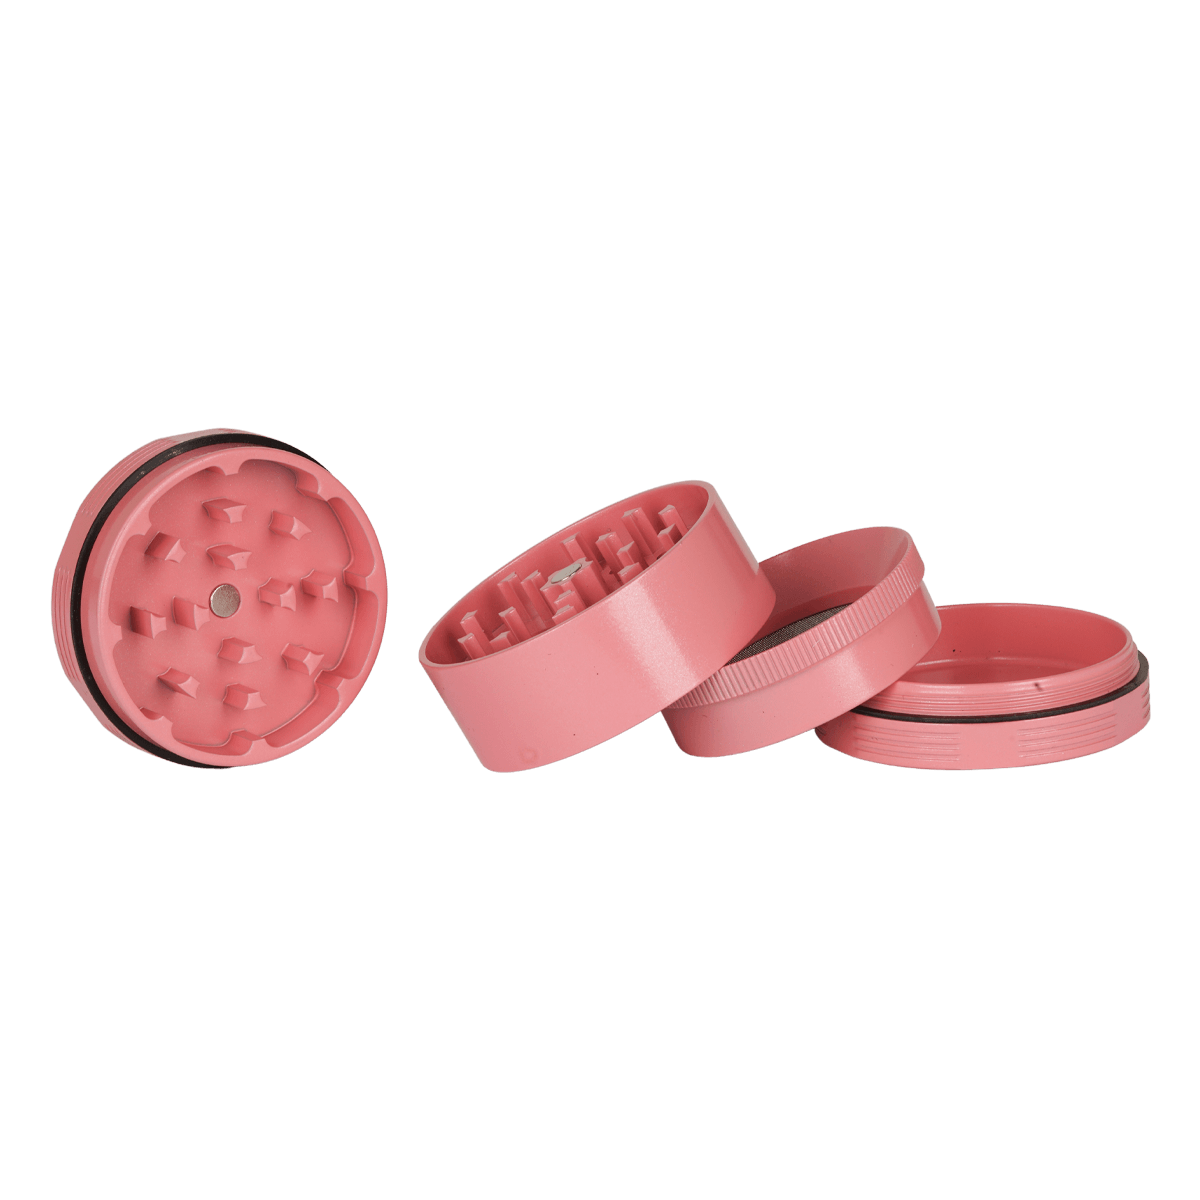 SLX Alu Mühle 4-Teilig, Flamingo Pink, 50.8mm Keramikbeschichtung 